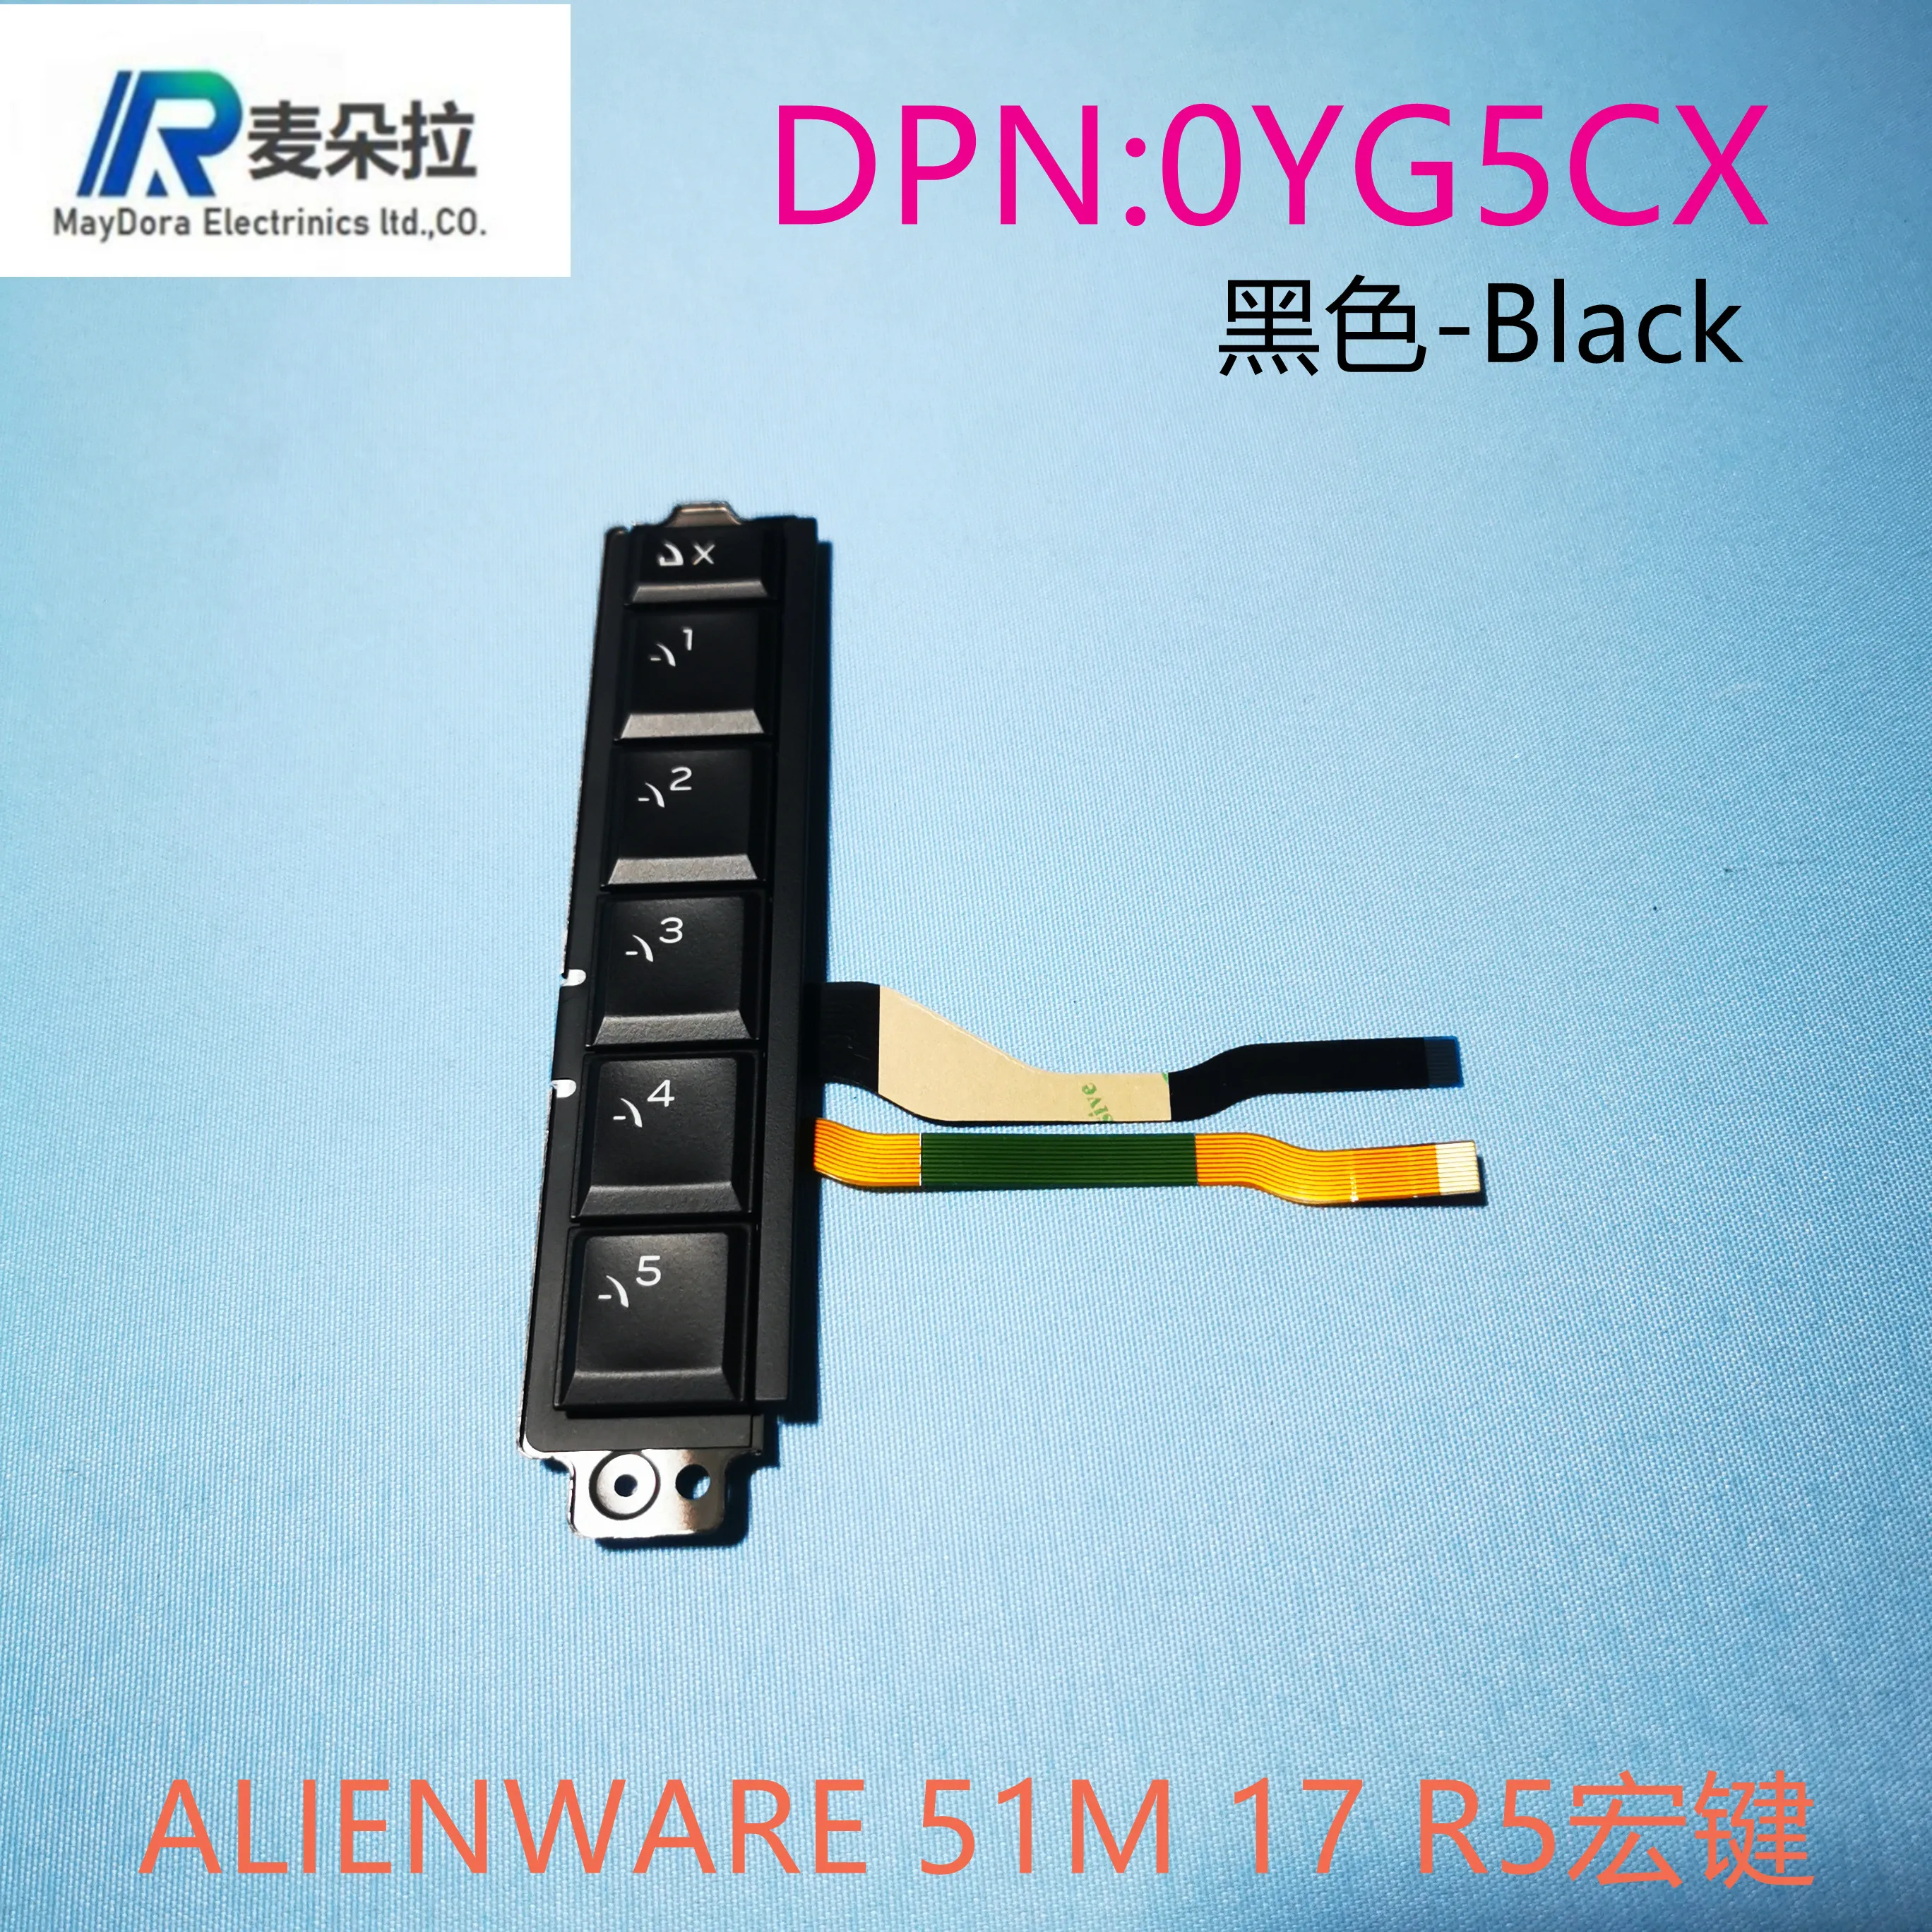 

Laptop FUNCTION key for DELL ALIENWARE 15 R4 17 R5 AREA 51M laptop RGB backlight Keyboard BLACK 0YG5CX